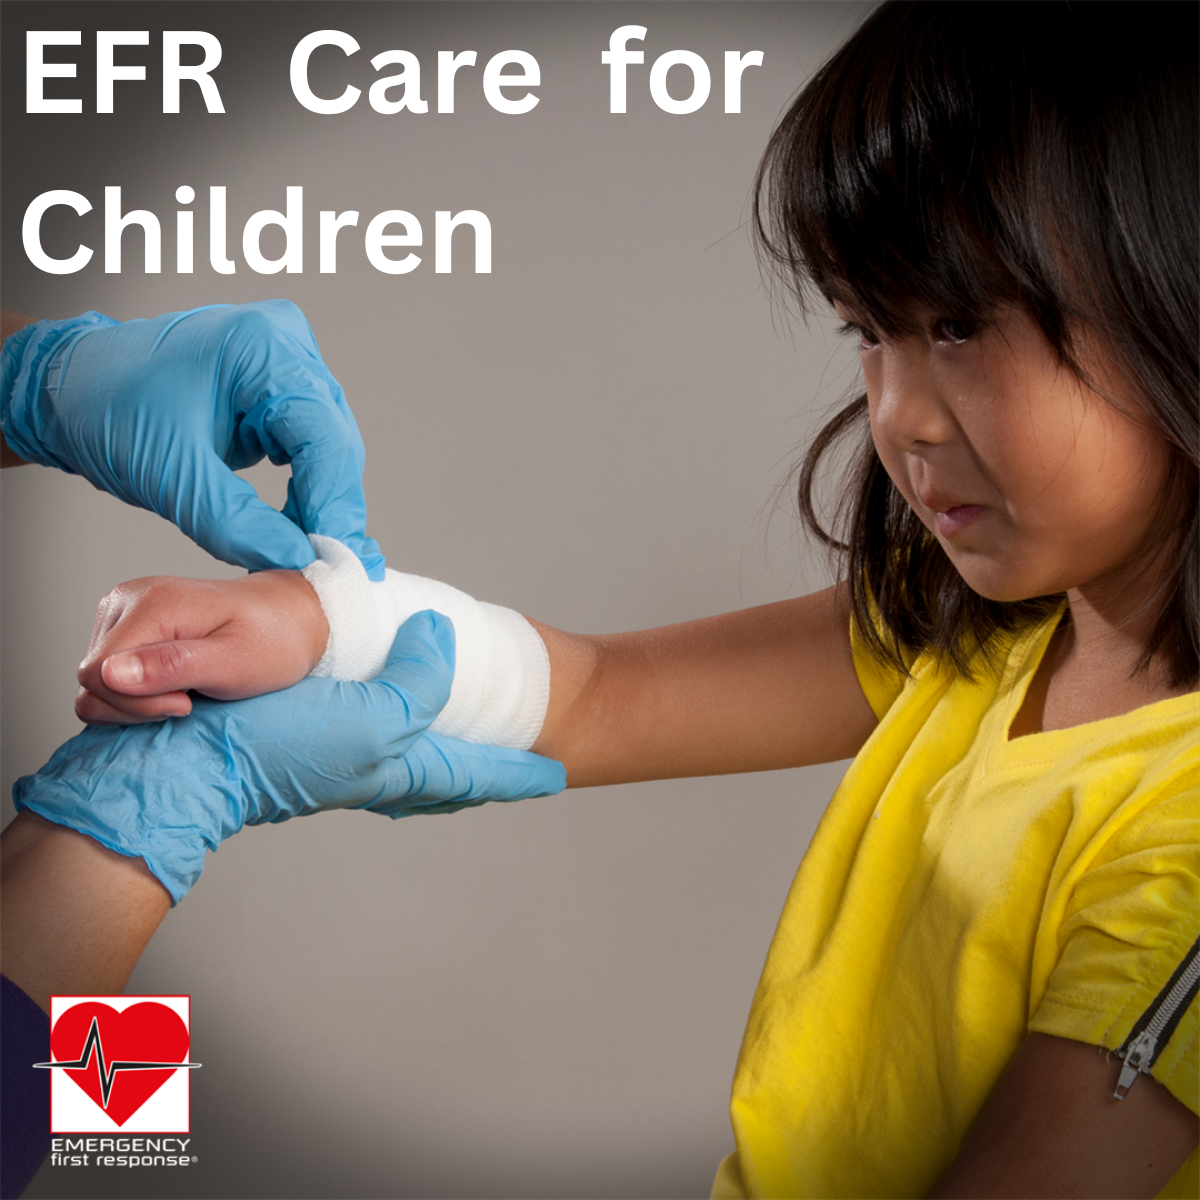 EFR CARE FOR CHILDREN